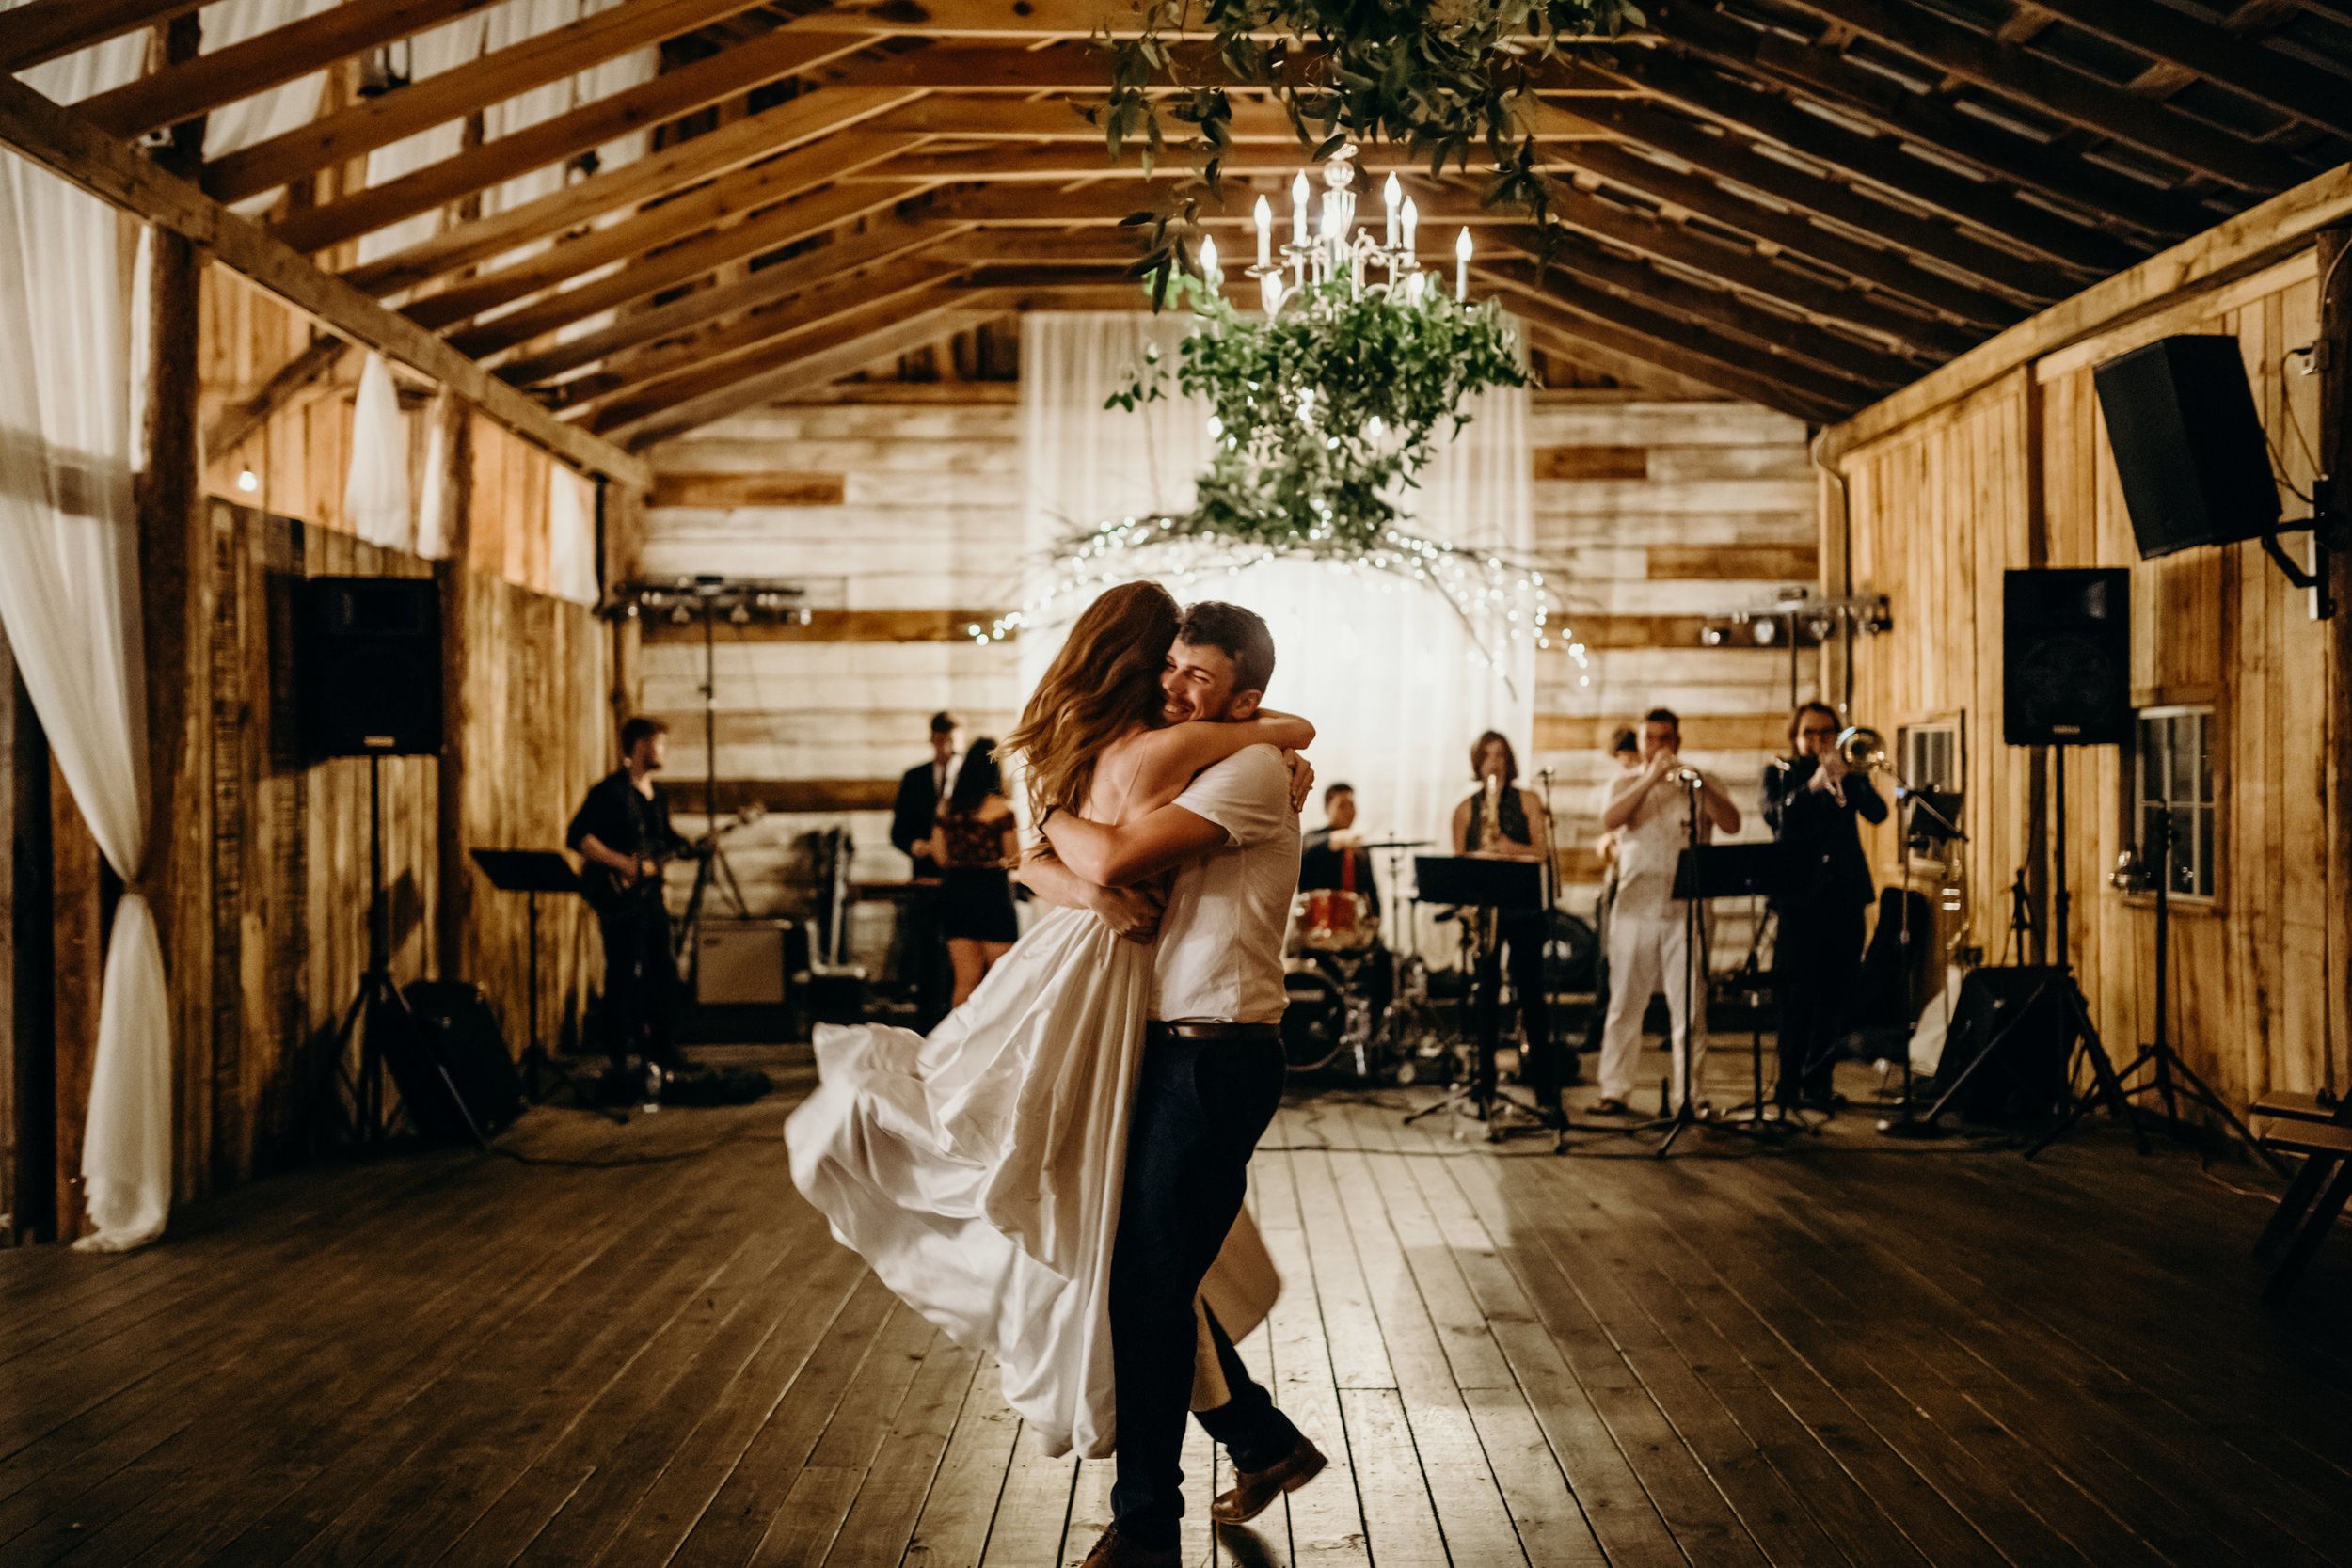 First dance under greenery chandeliers // Meadow Hill Farm Wedding, Nashville, TN